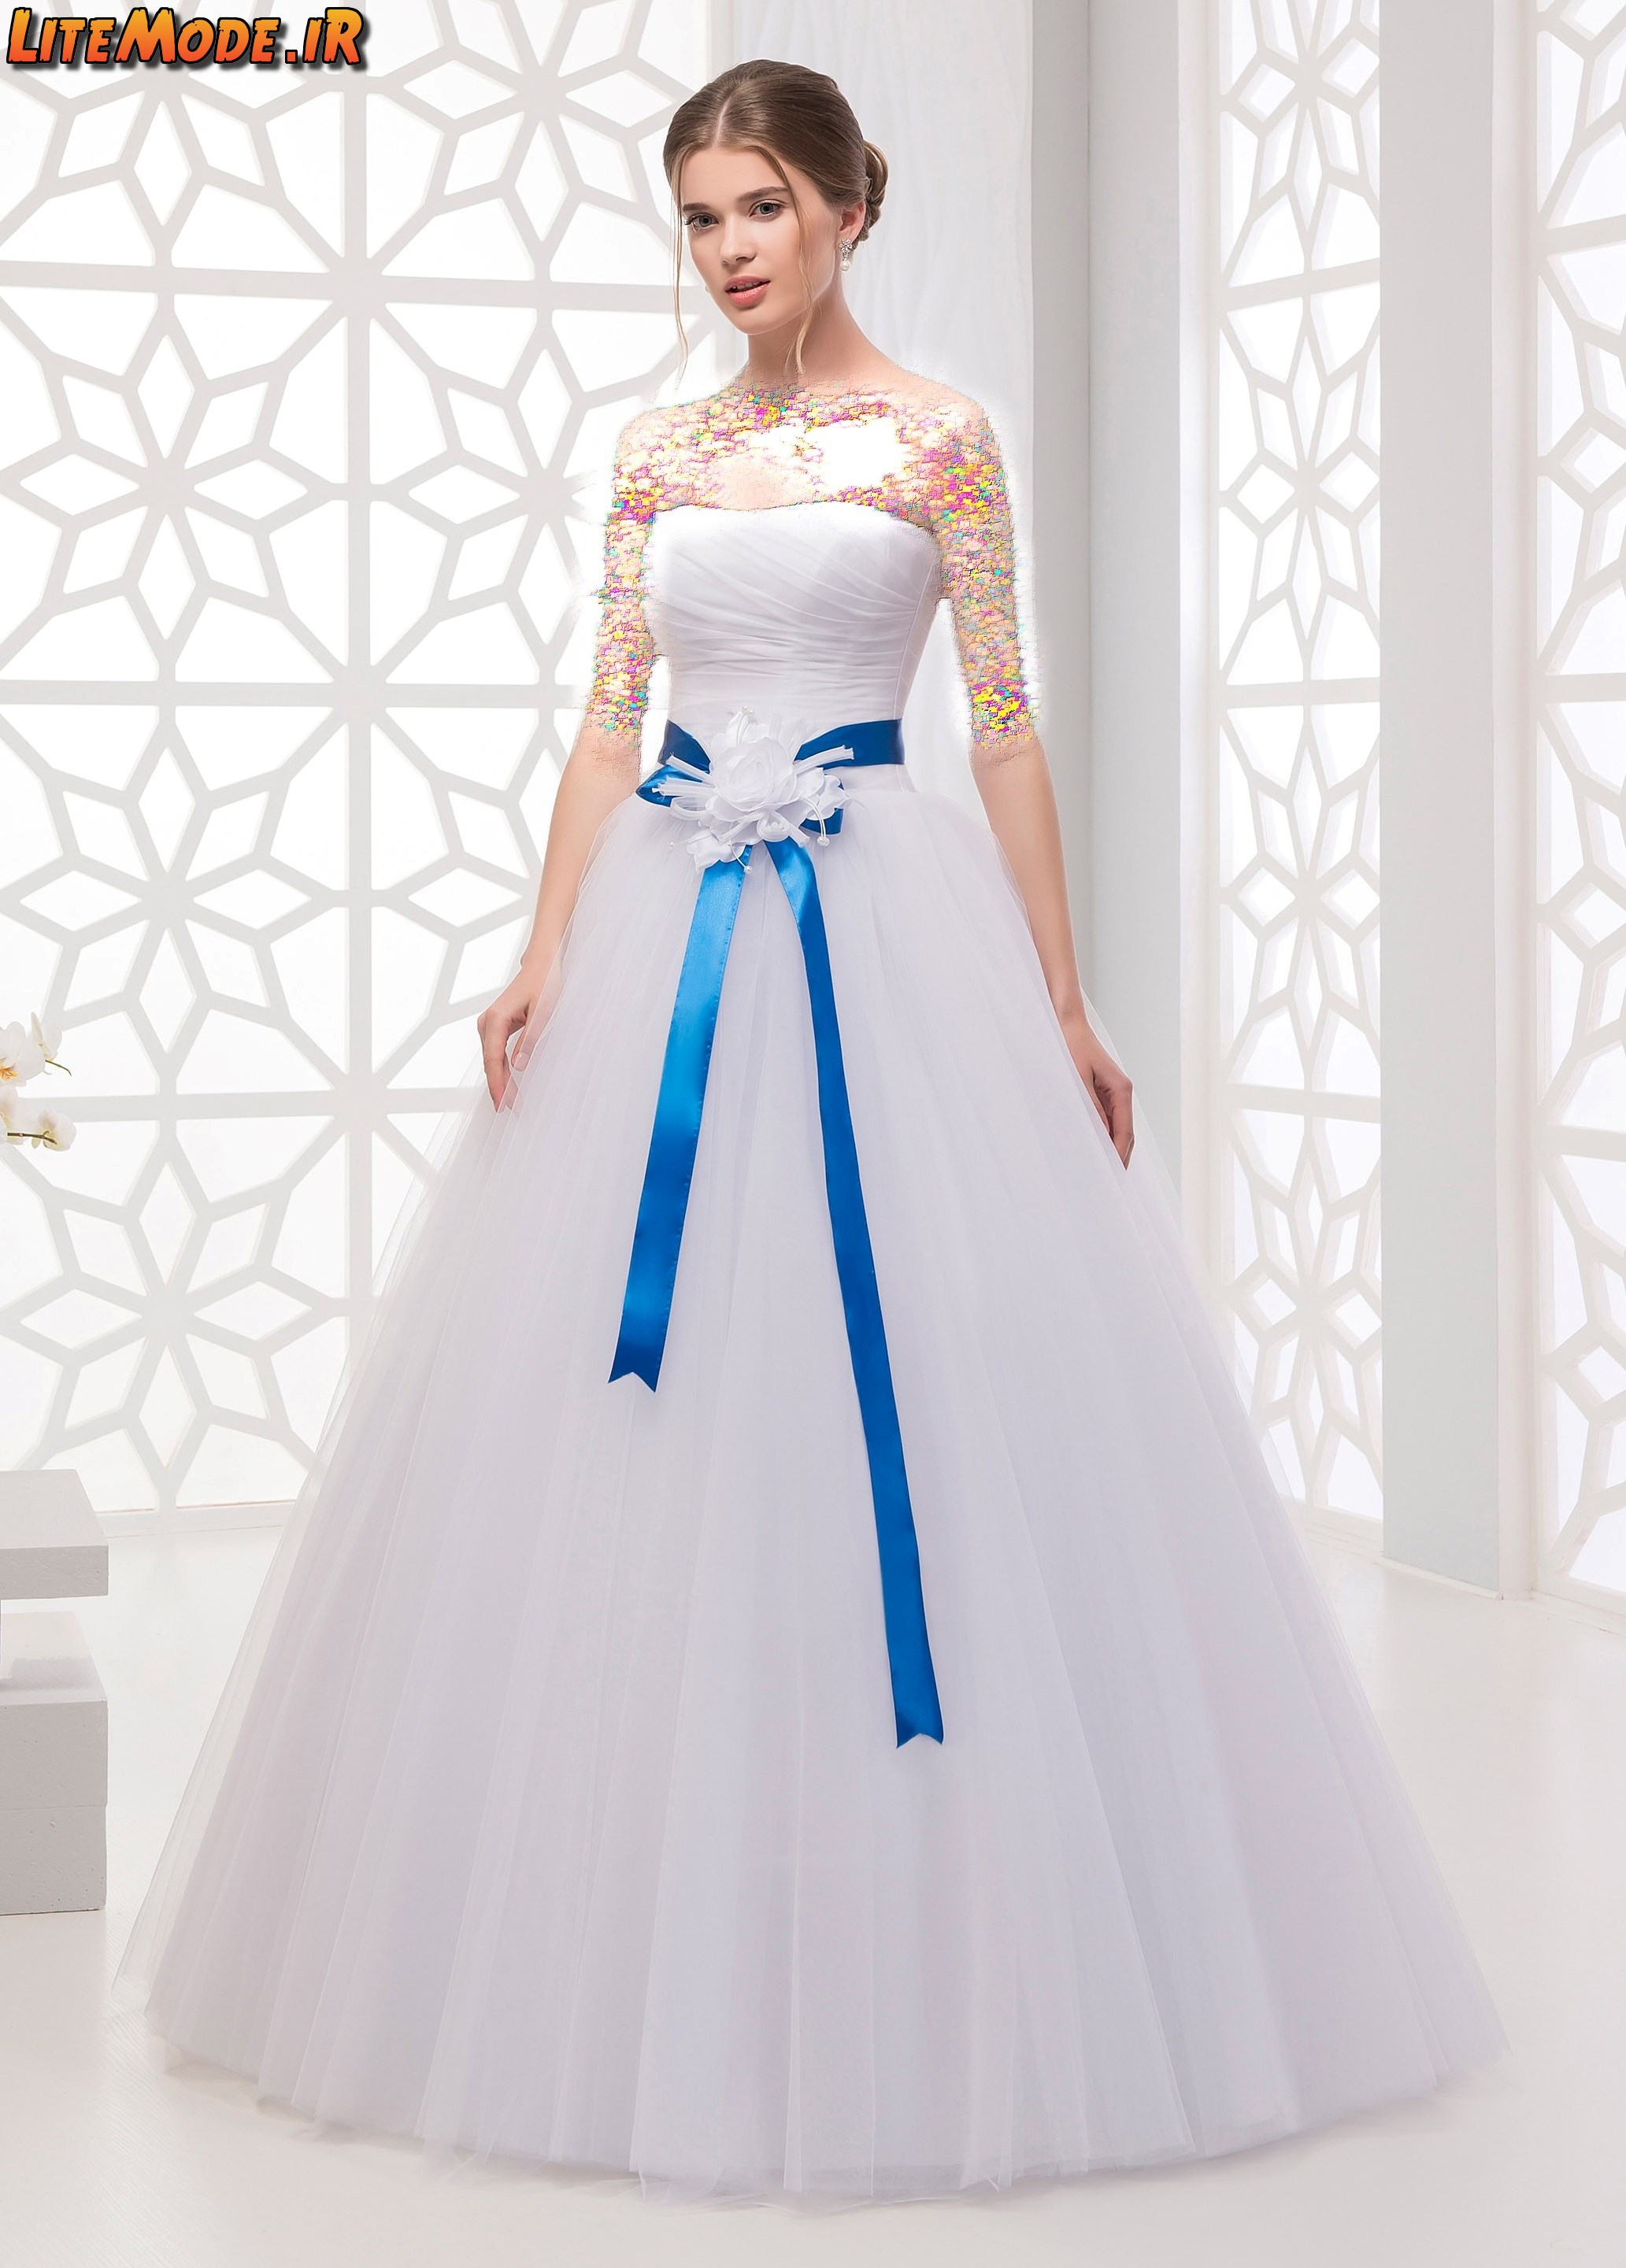 لباس عروس بلند,مدل لباس عروس پرنسسی,مدل لباس عروس پفی,مدل لباس عروس پوشیده